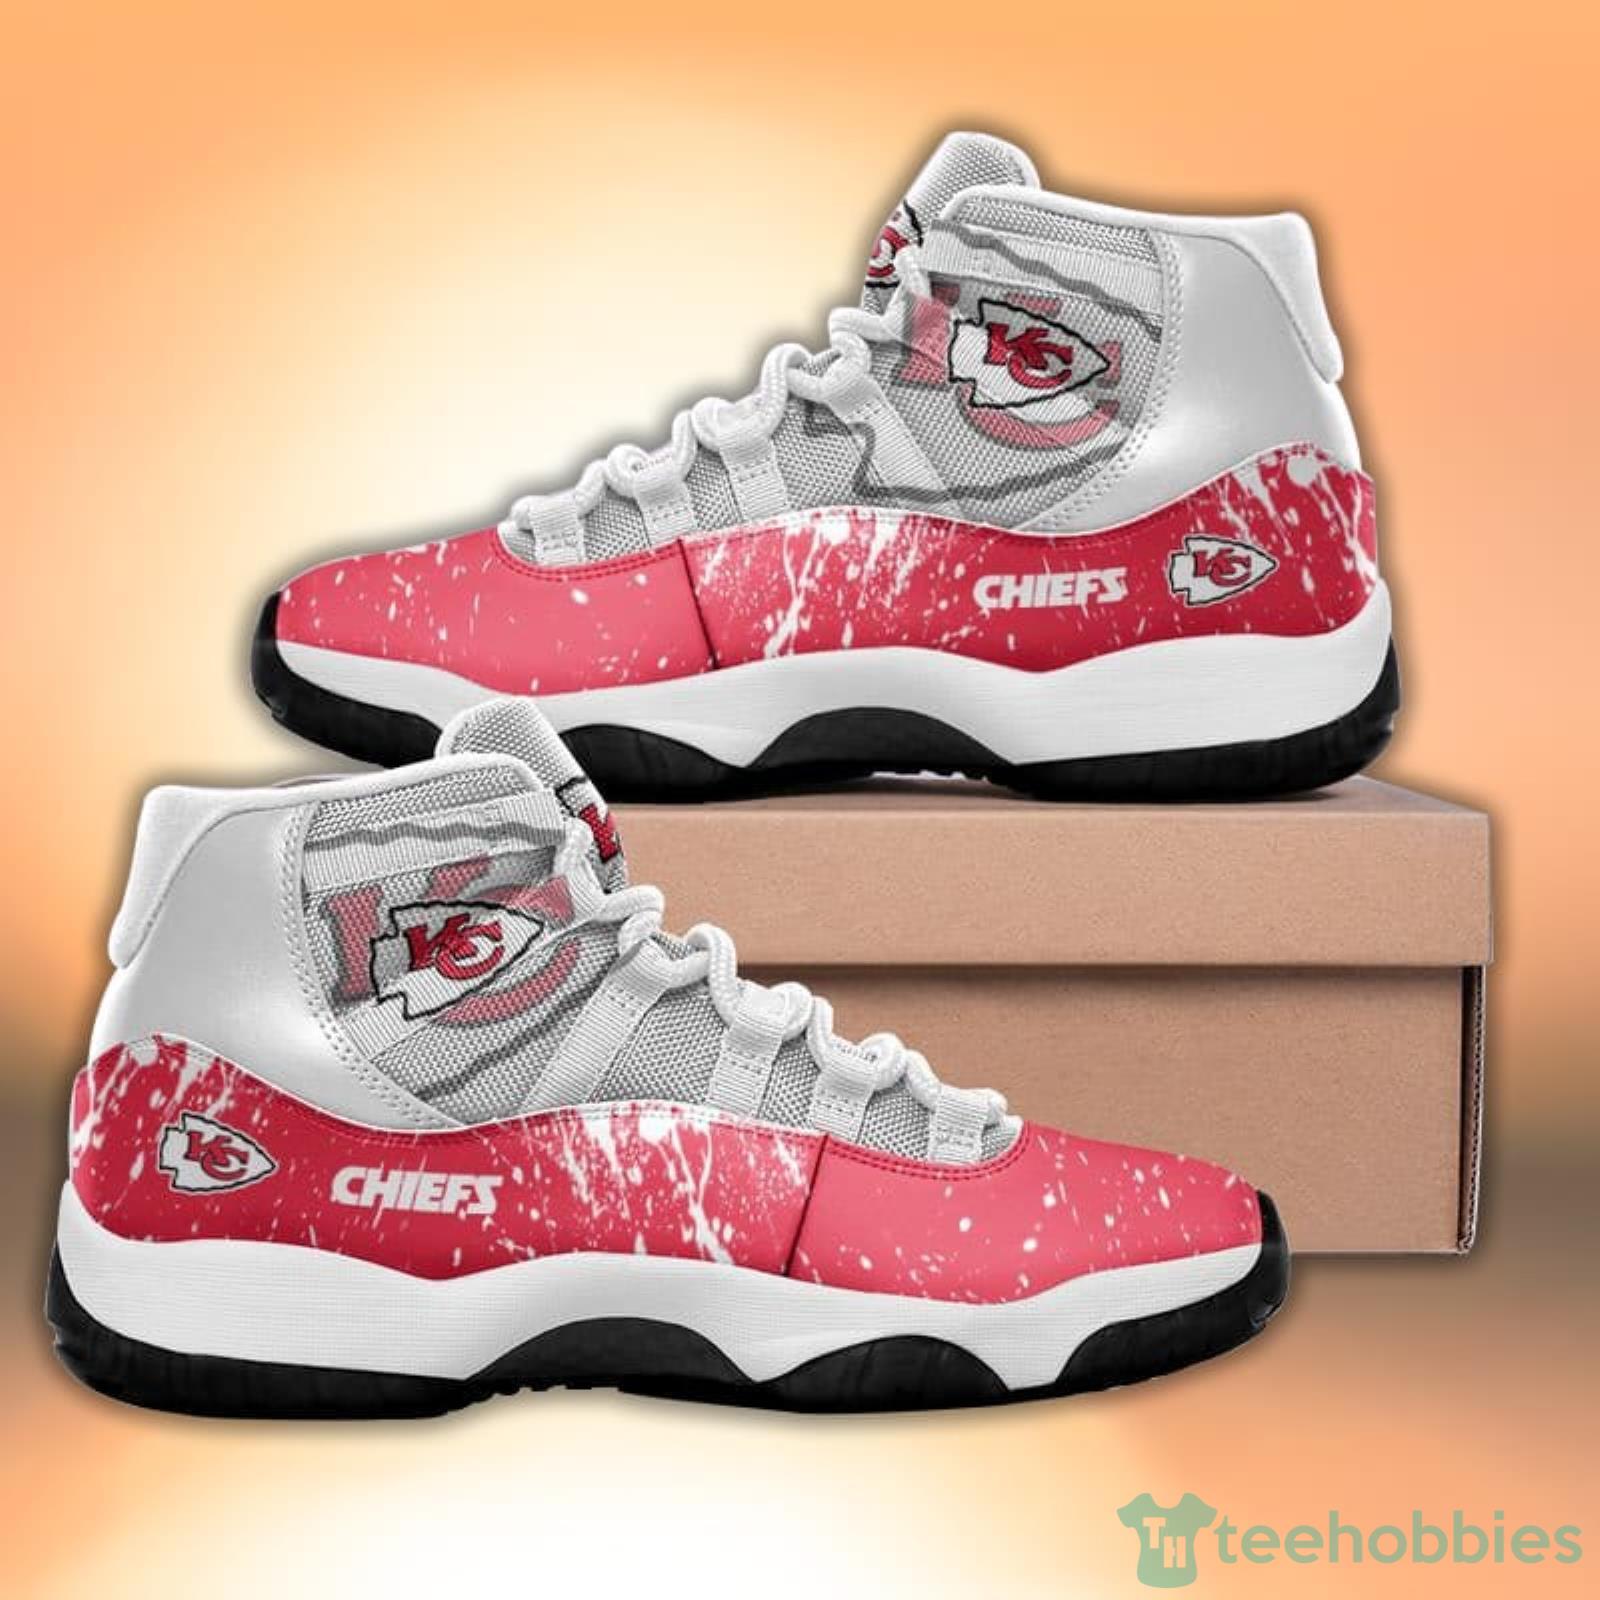 Kansas City Chiefs Paint Flakes Pattern Style Sneaker Air Jordan 11 Shoes Product Photo 1